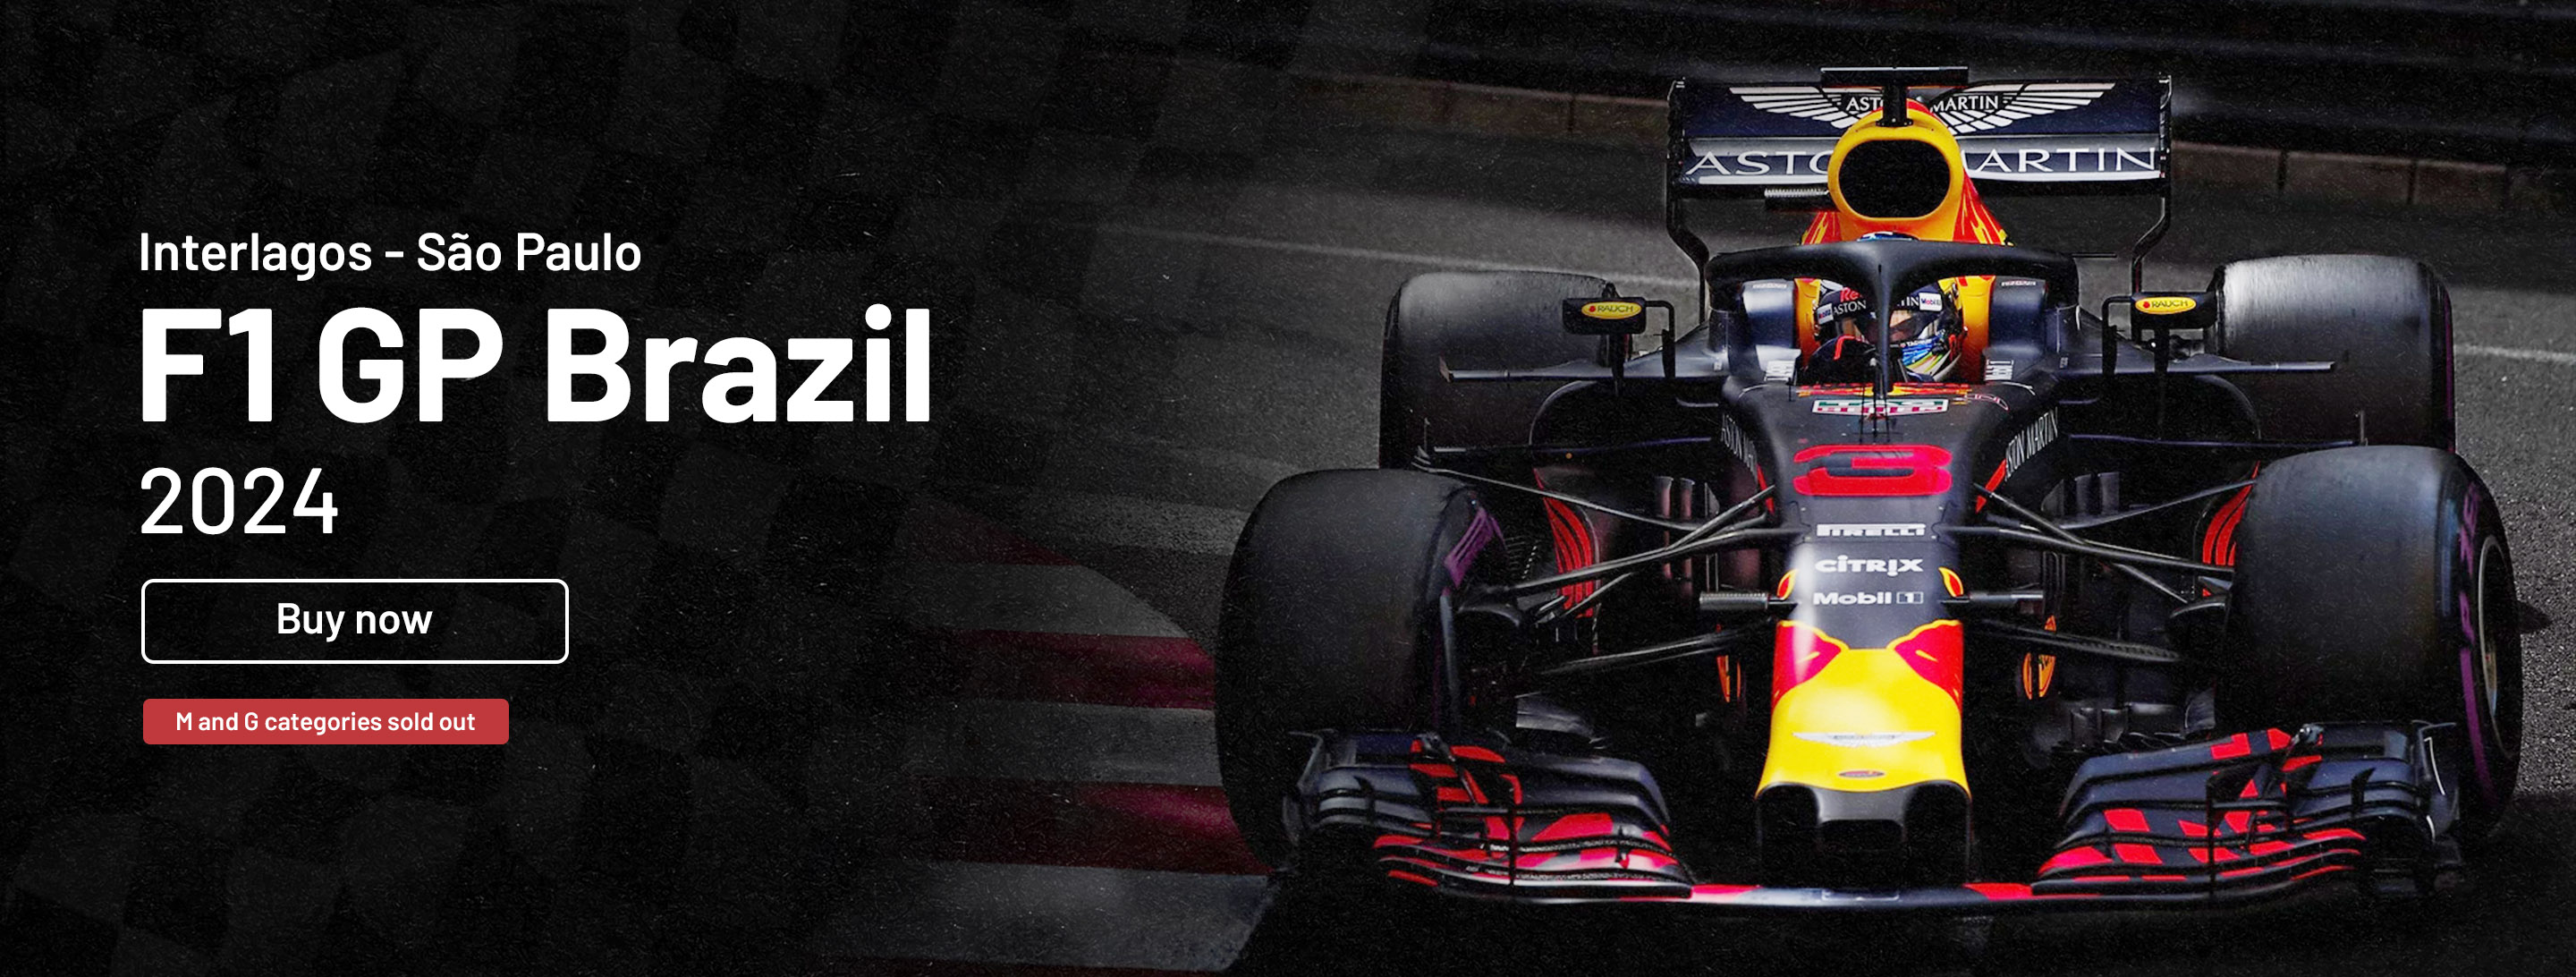 F1 GP Brazil 2024